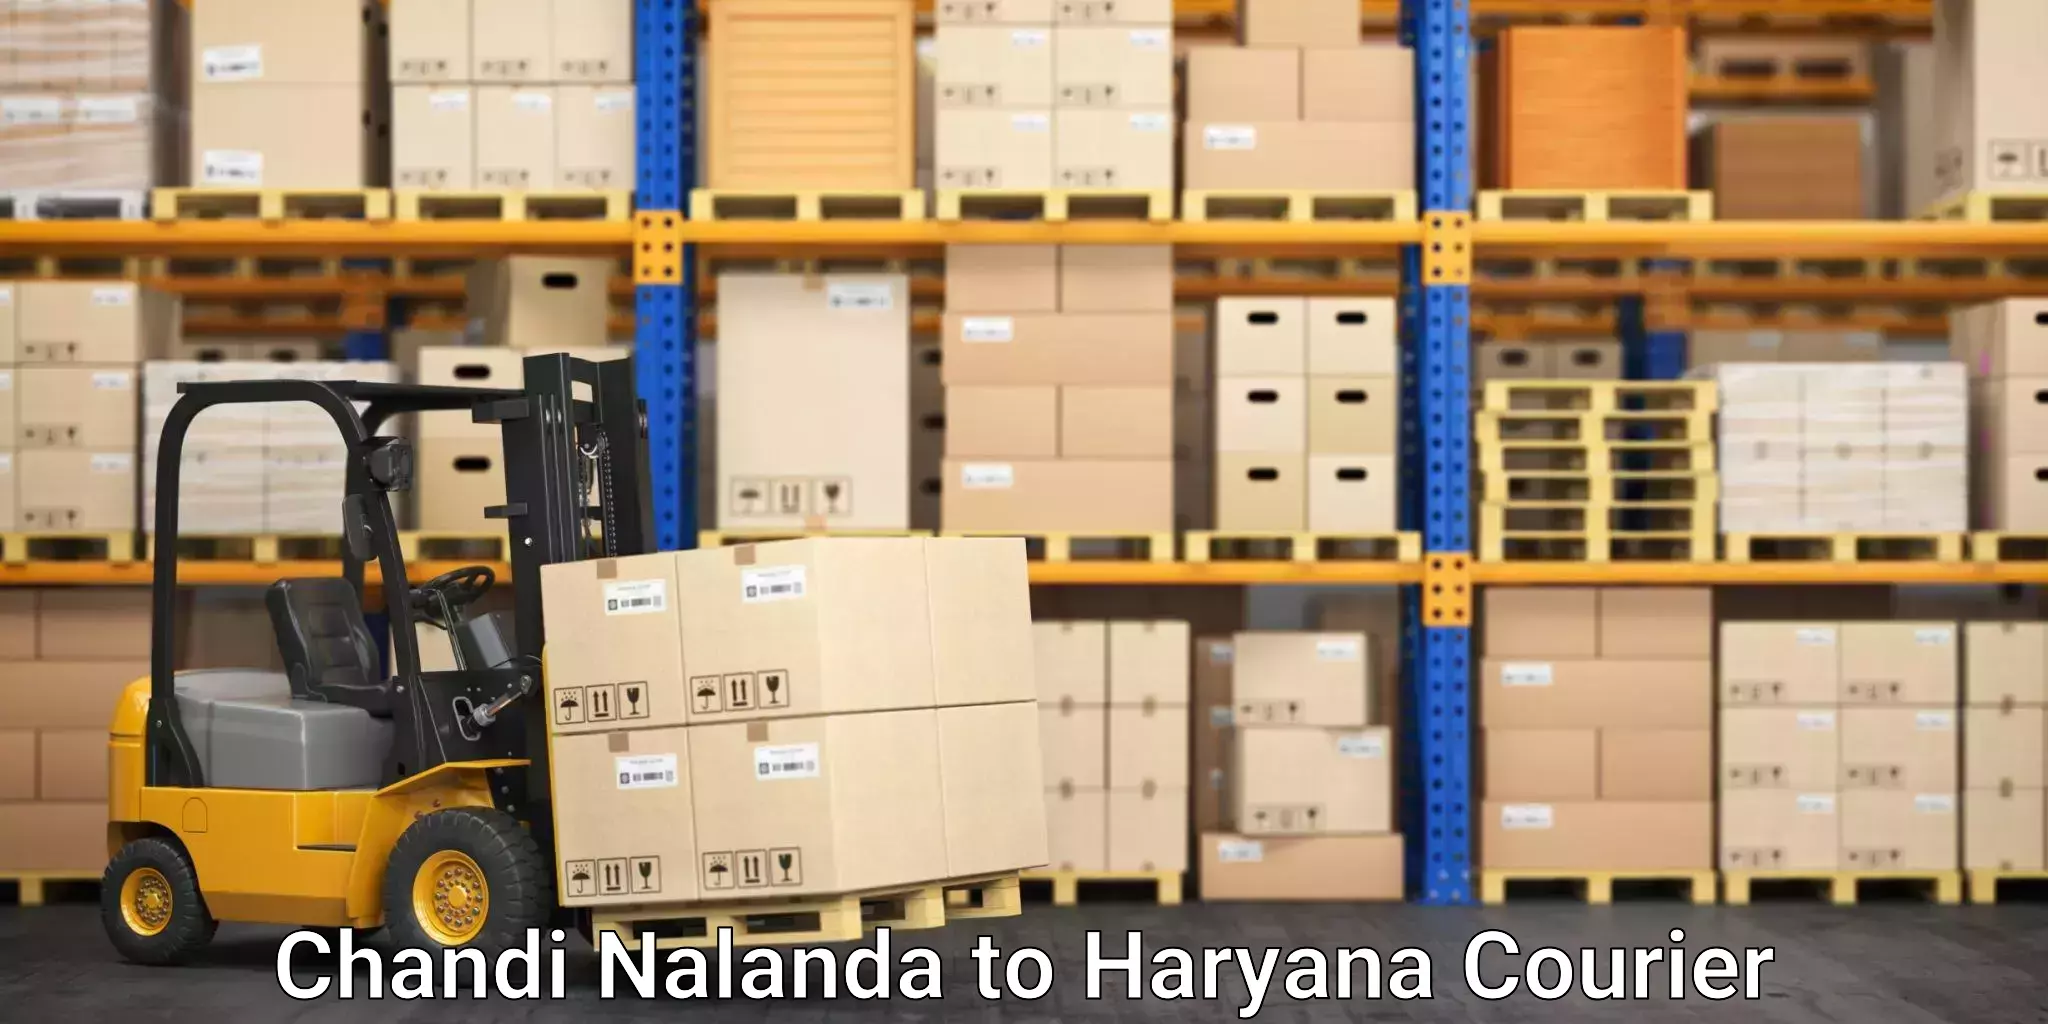 Furniture transport solutions Chandi Nalanda to Gurgaon